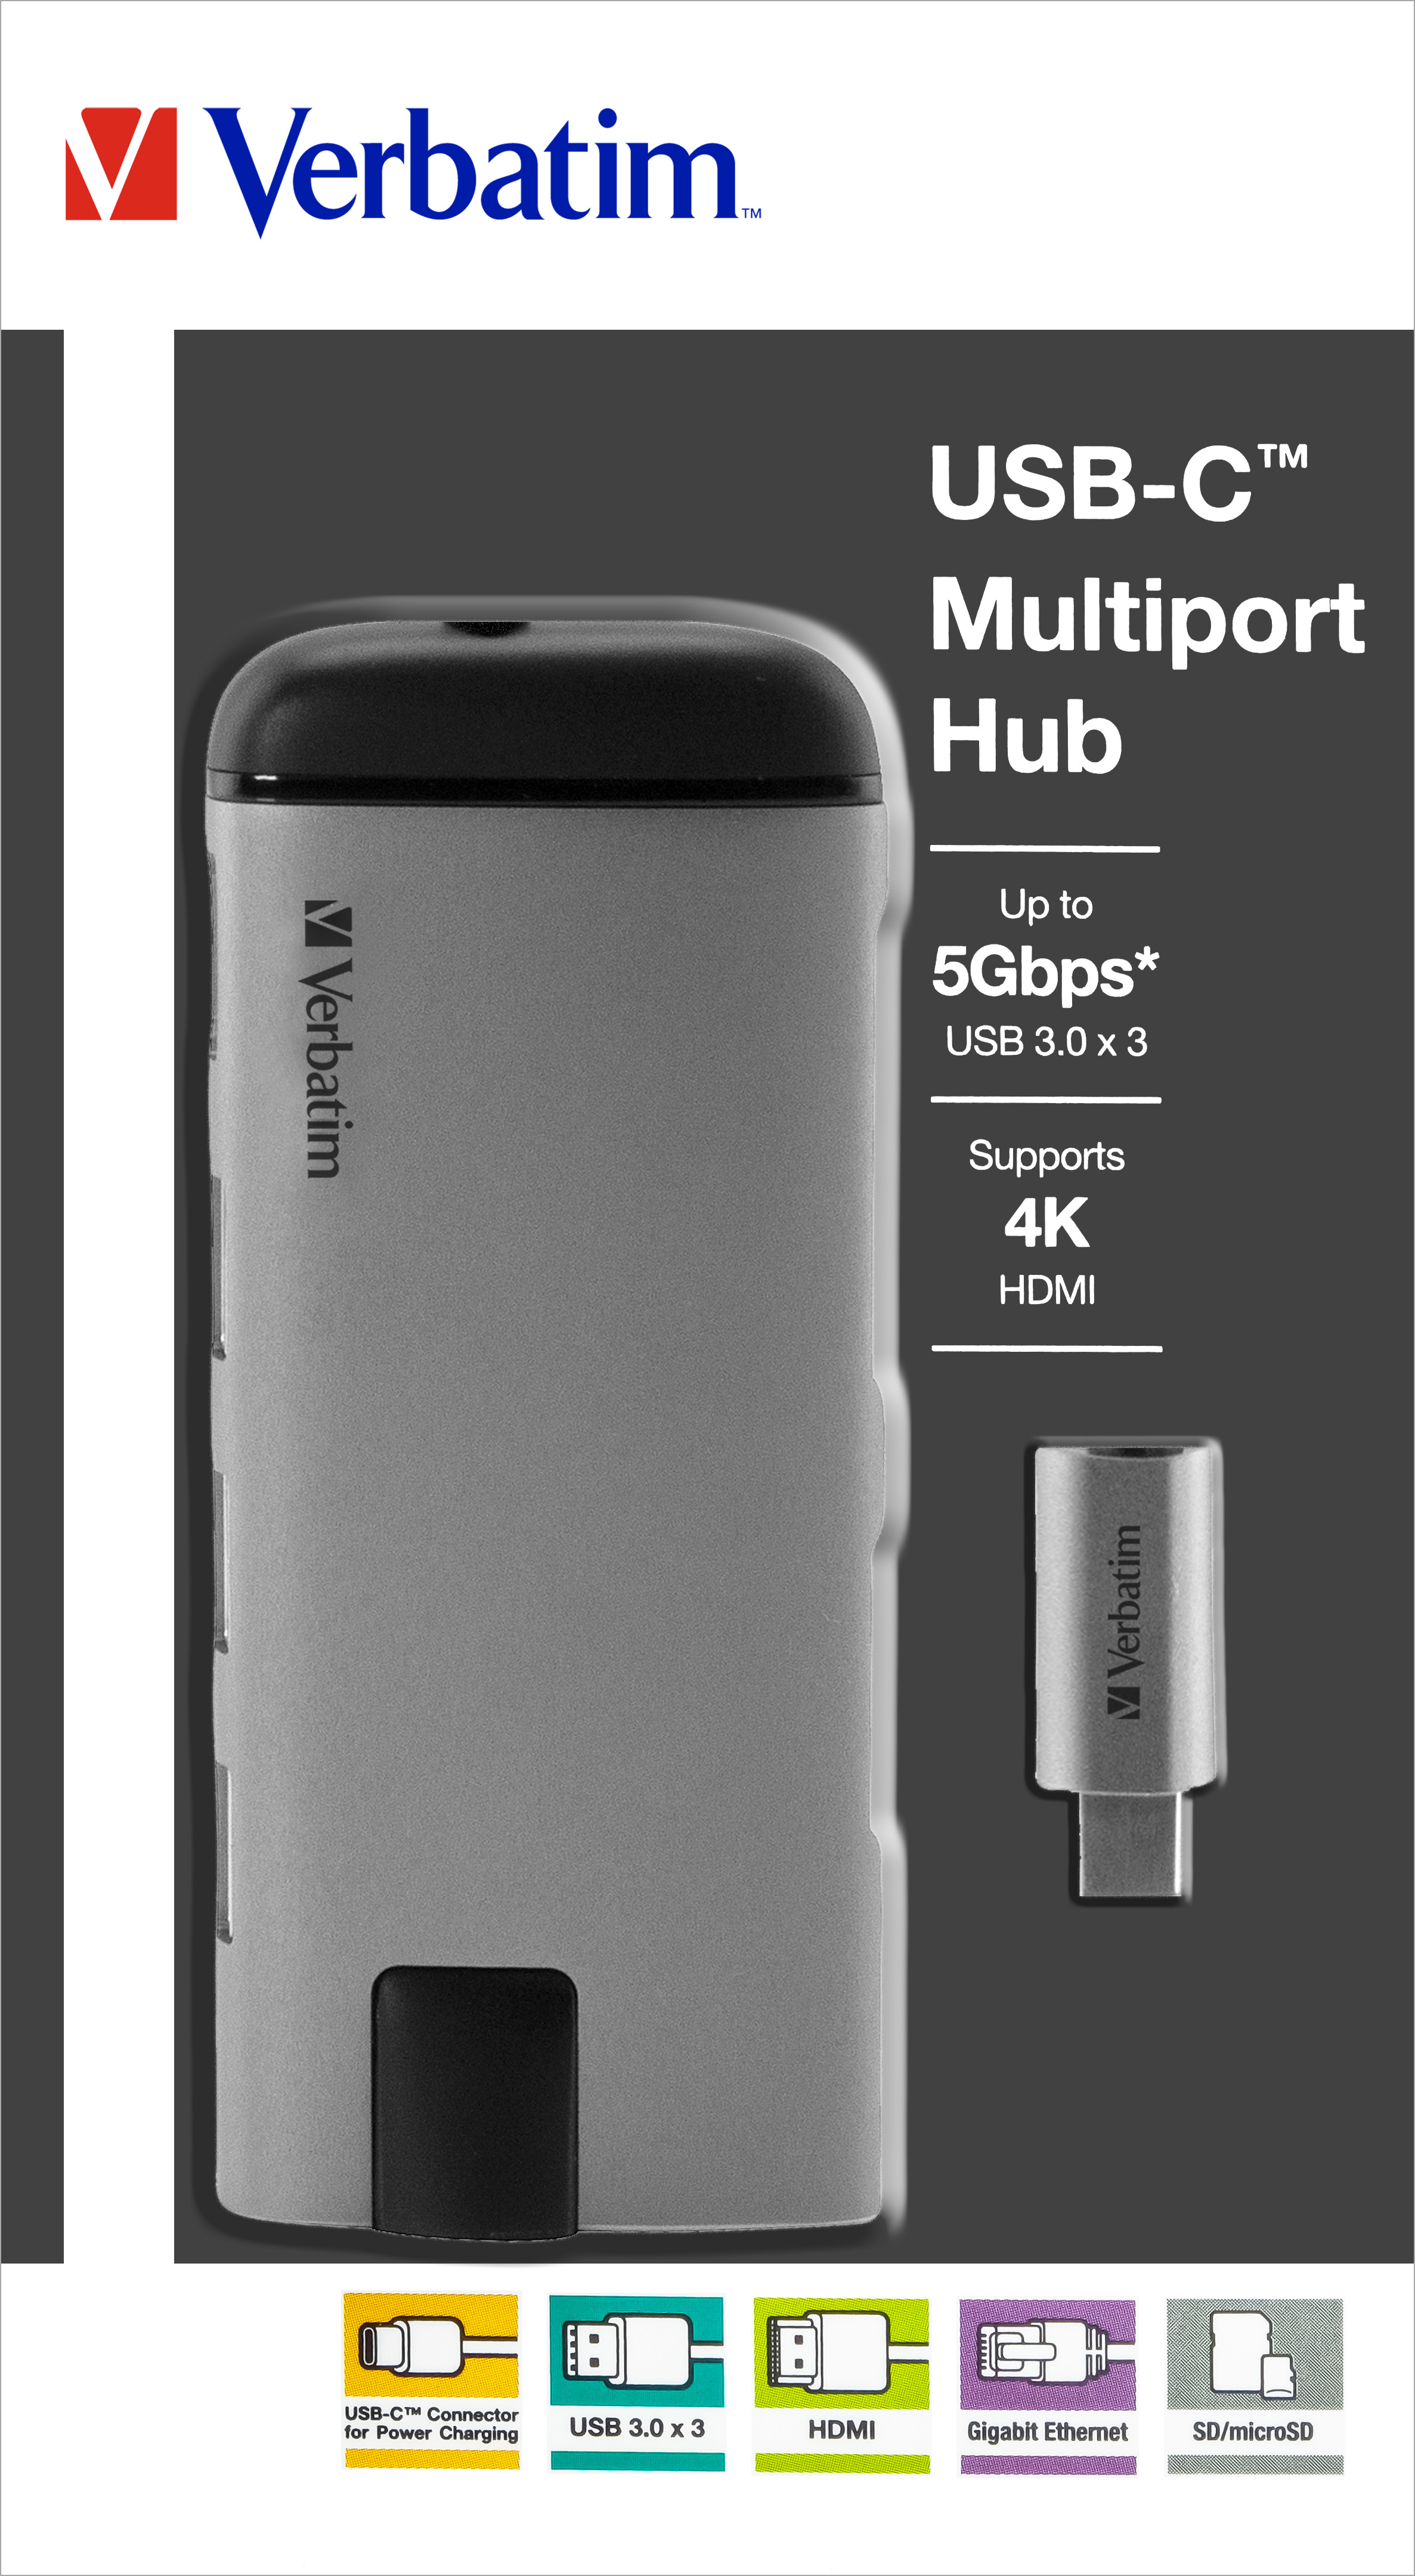 Verbatim Hub, USB 3.1-C, Multiport 3x USB 3.0, HDMI 4K, RJ45 Gigabit, SD/micSD, Power Charge, USB-C Kabel, 15cm, Retail